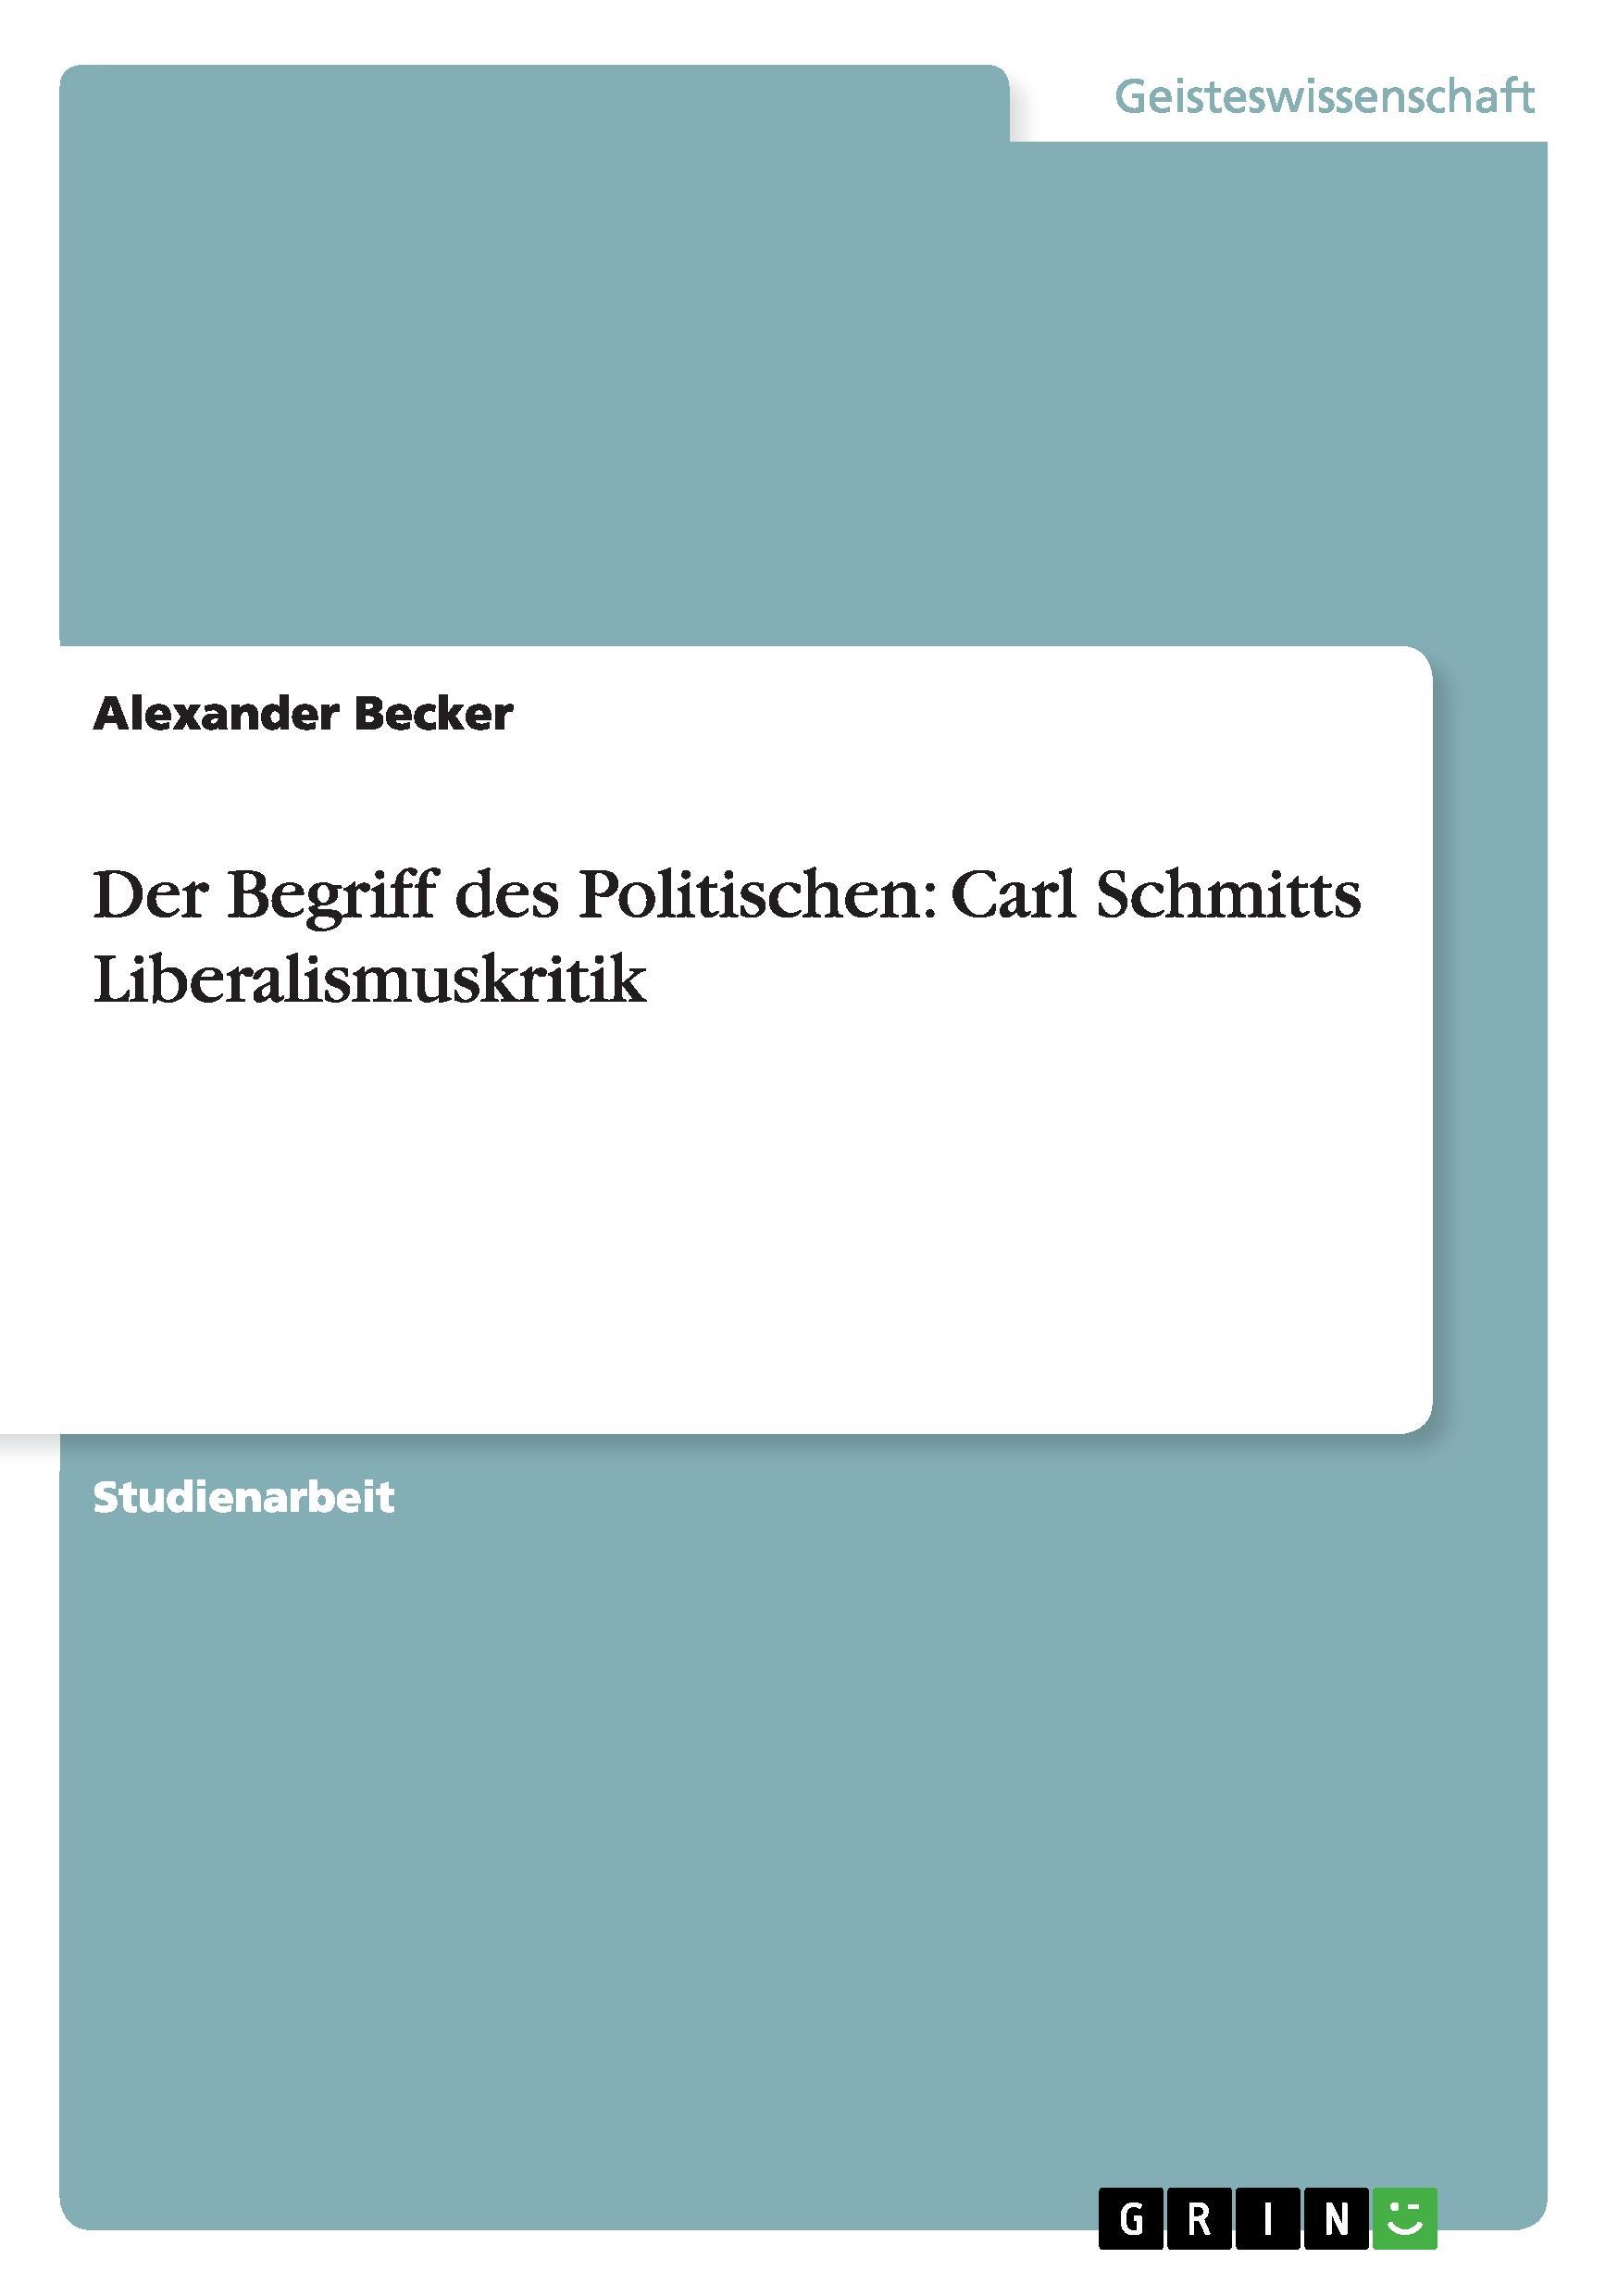 Der Begriff des Politischen: Carl Schmitts Liberalismuskritik - Becker, Alexander